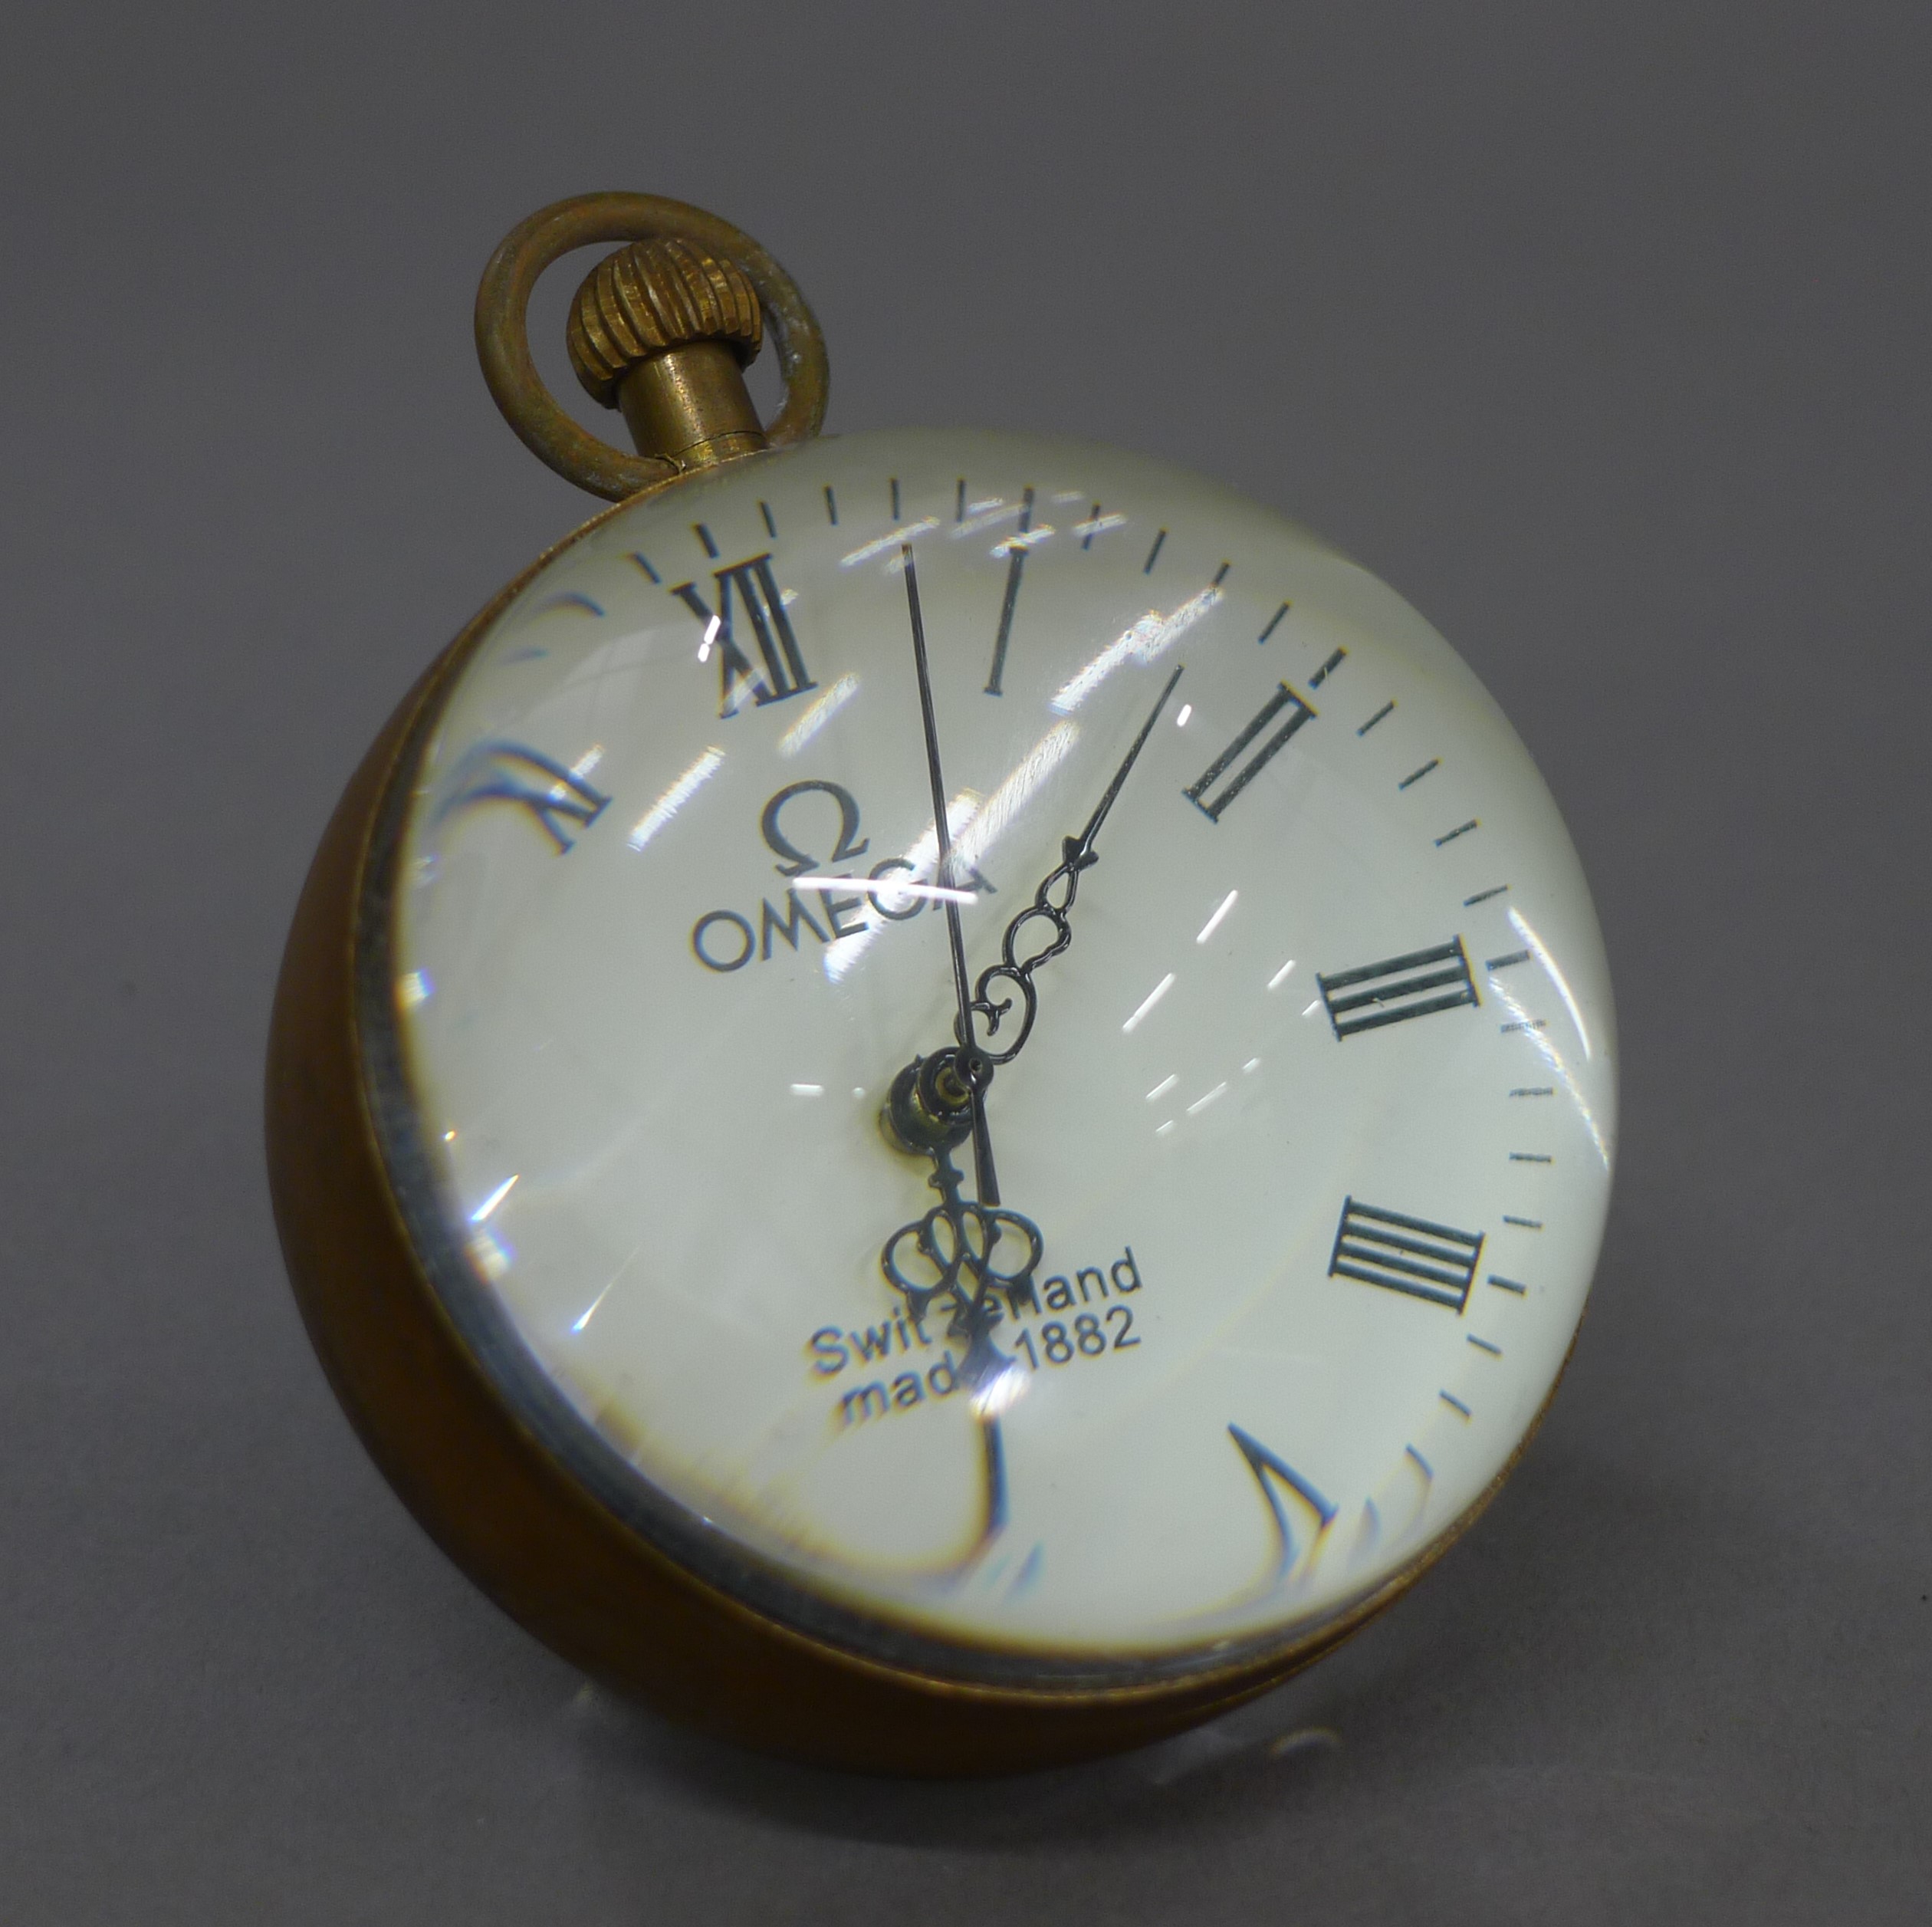 A ball clock. 6 cm high.